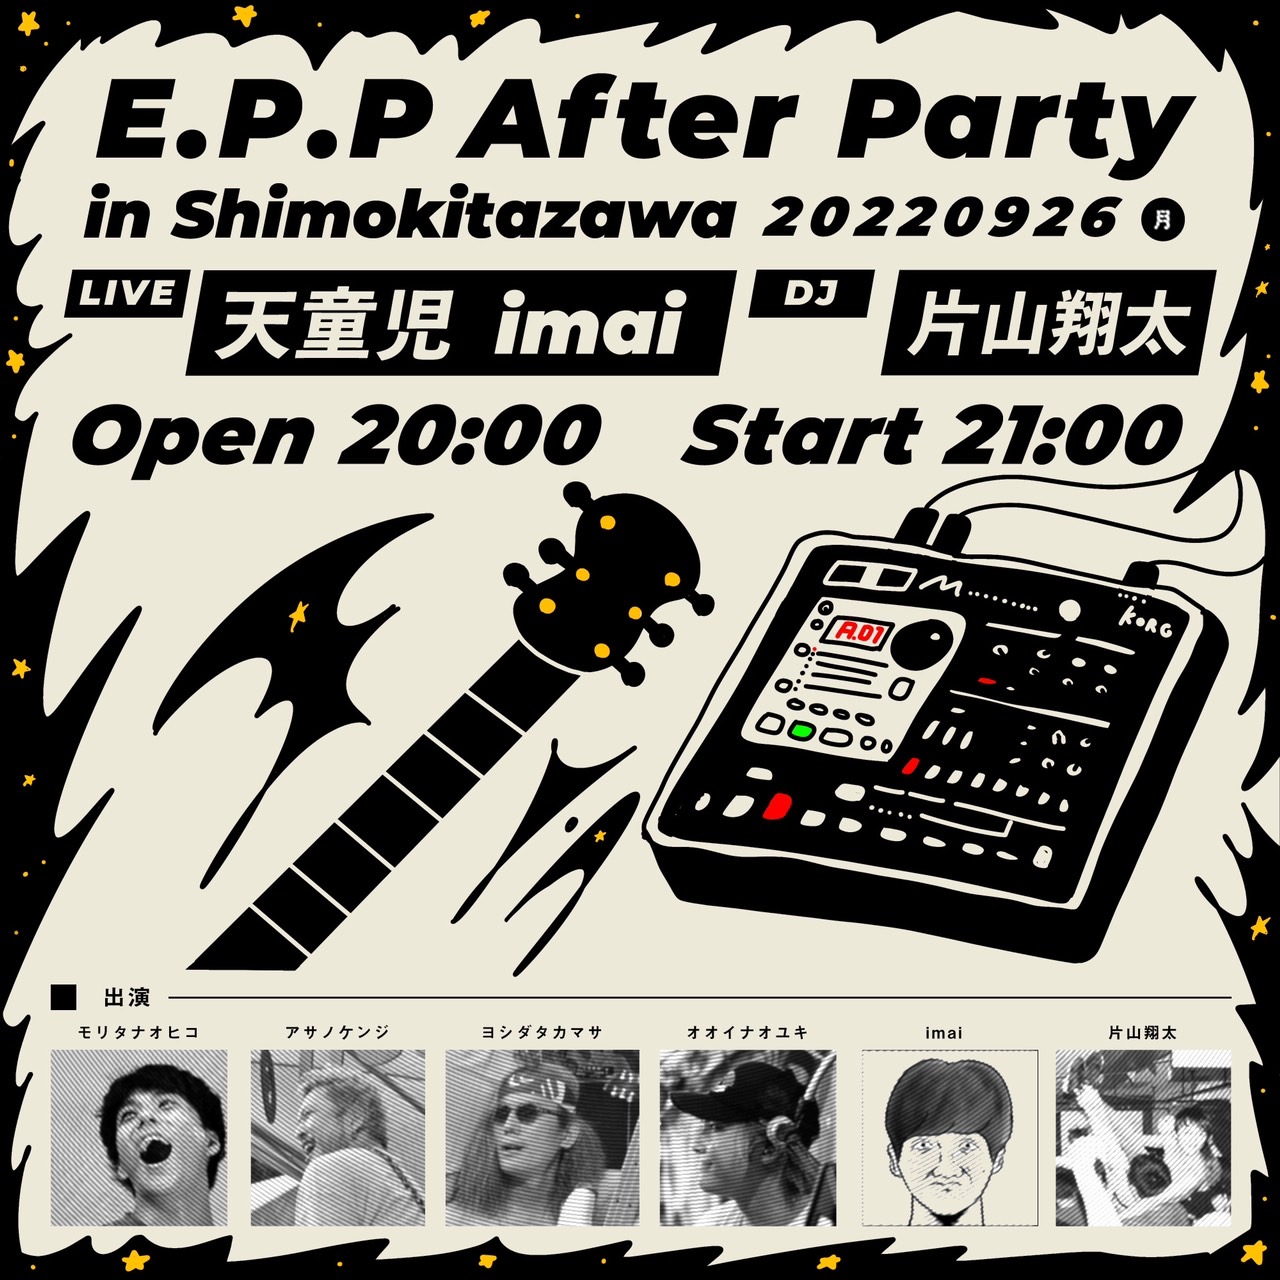 E.P.P After Party in Shimokitazawa